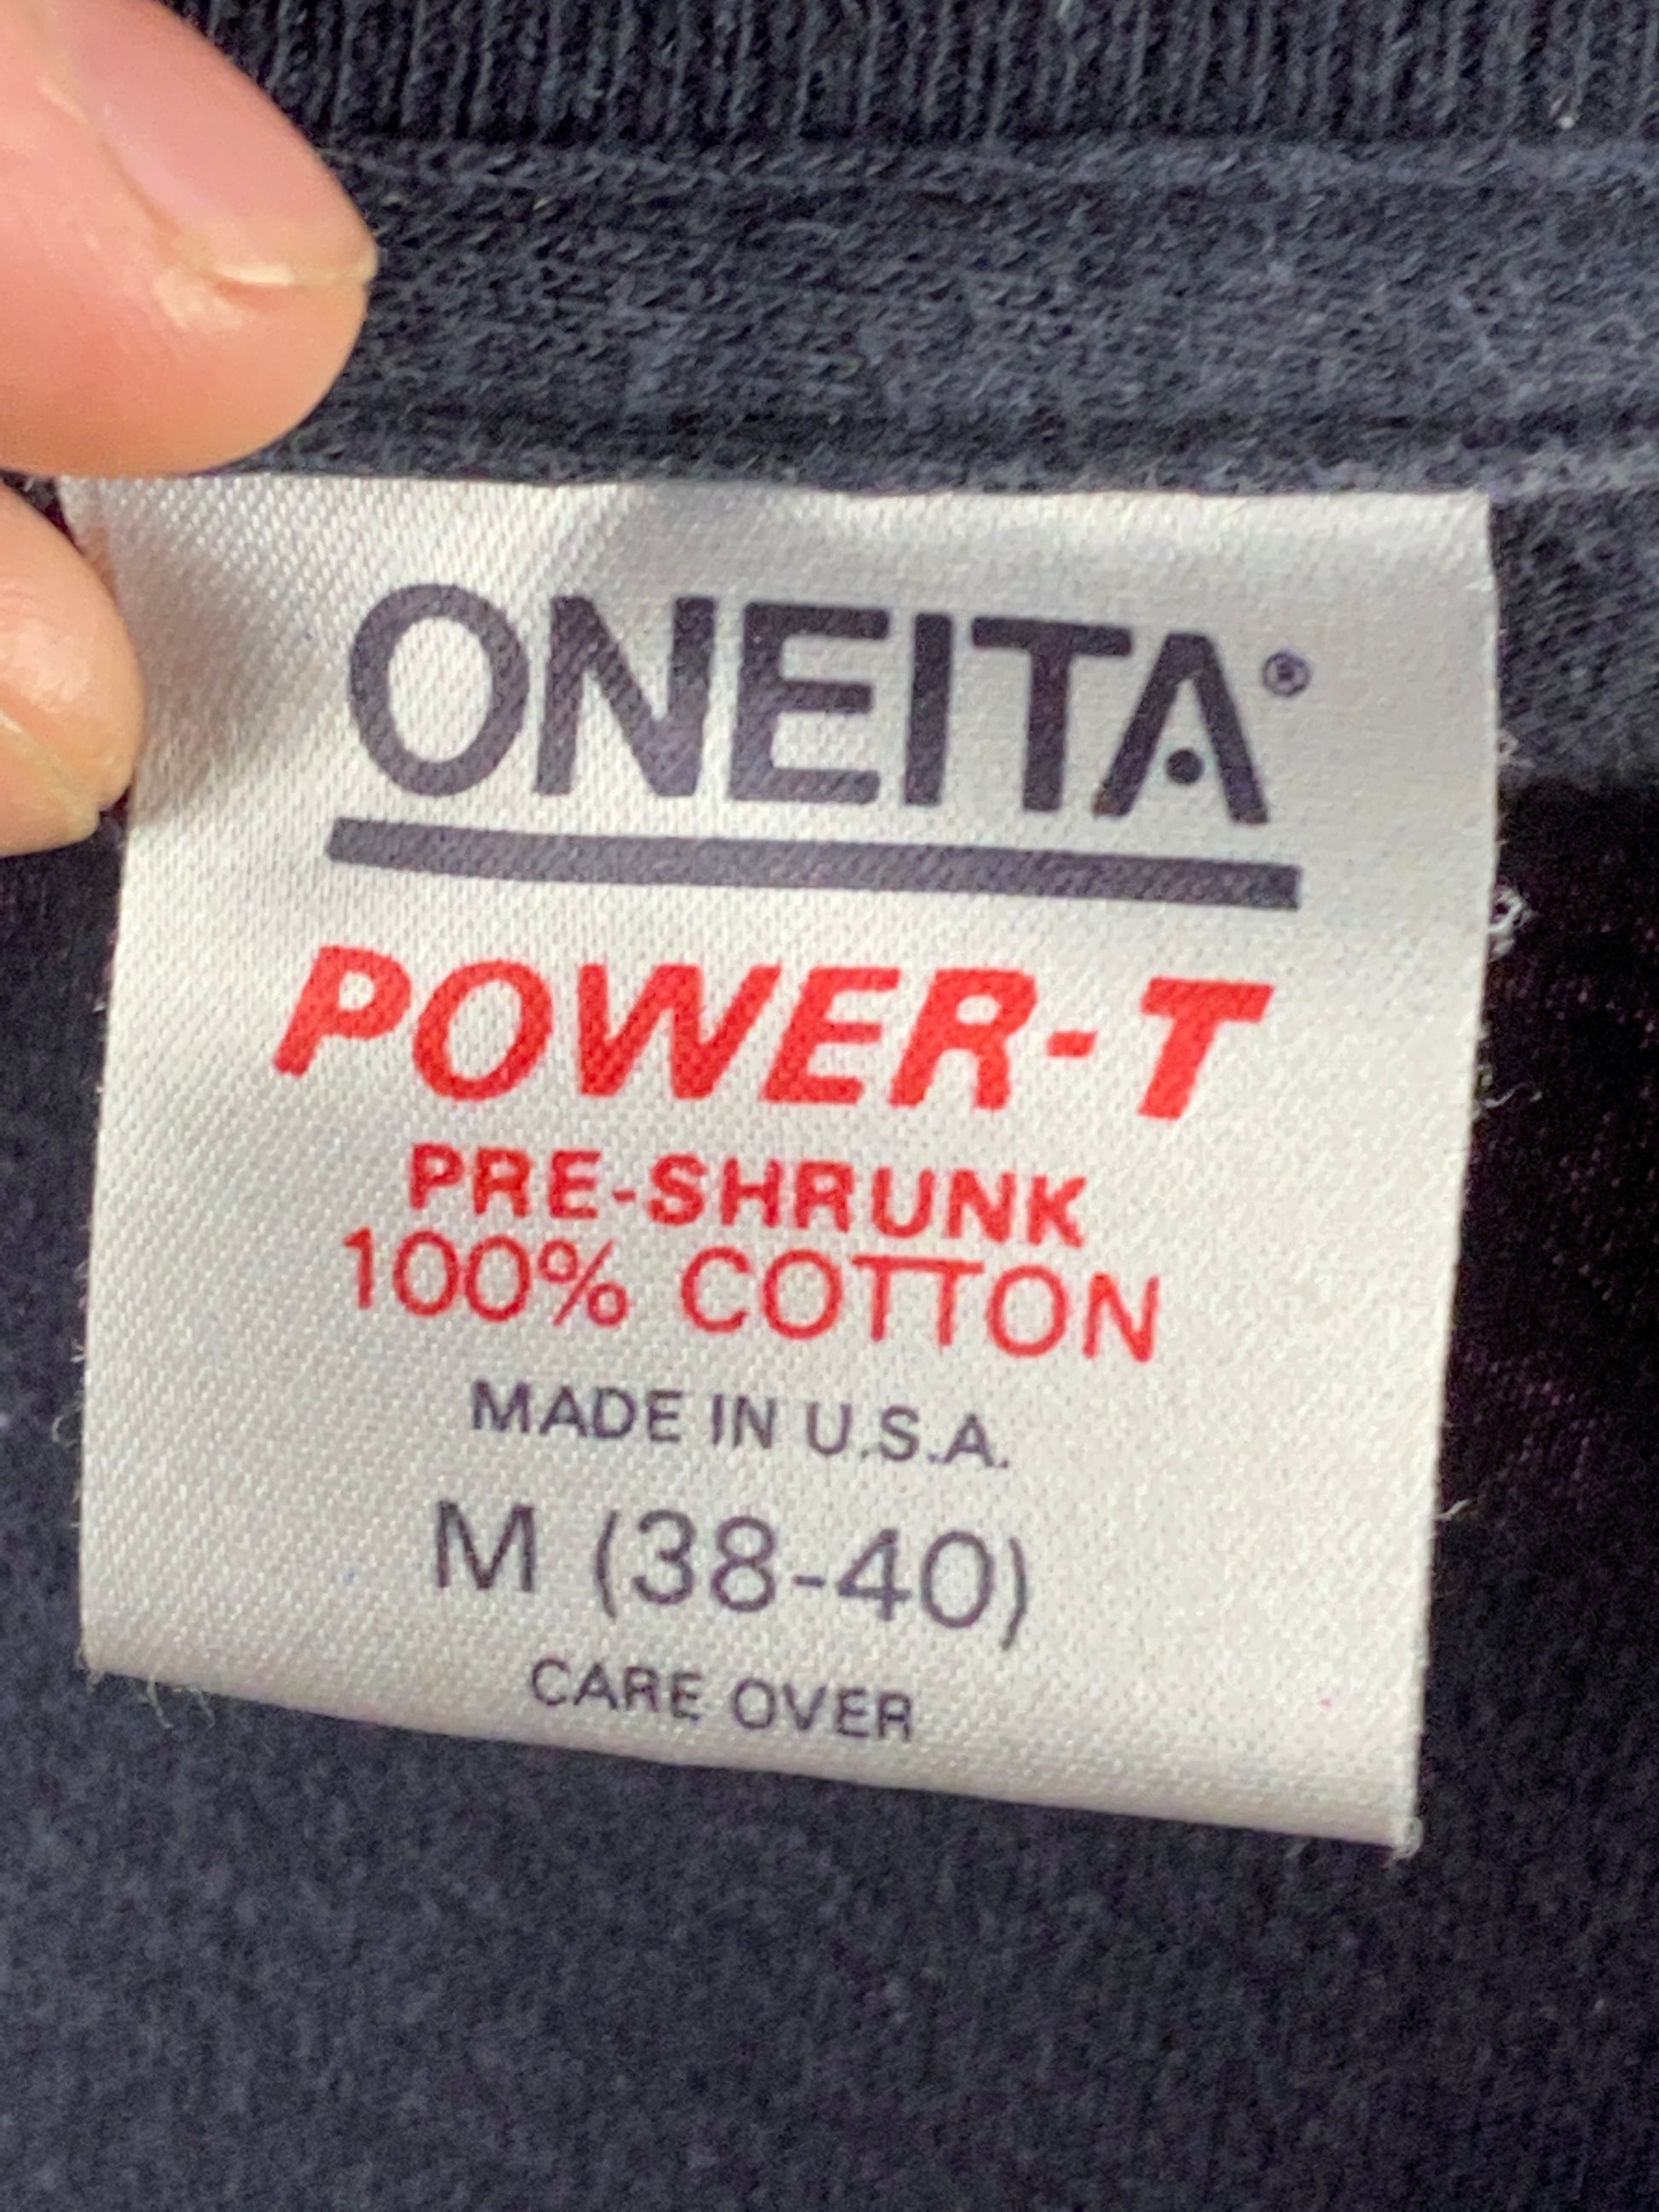 1989 Las Vegas Oneita Vintage Men's Las Vegas Merch T-Shirt - Small Black Cotton